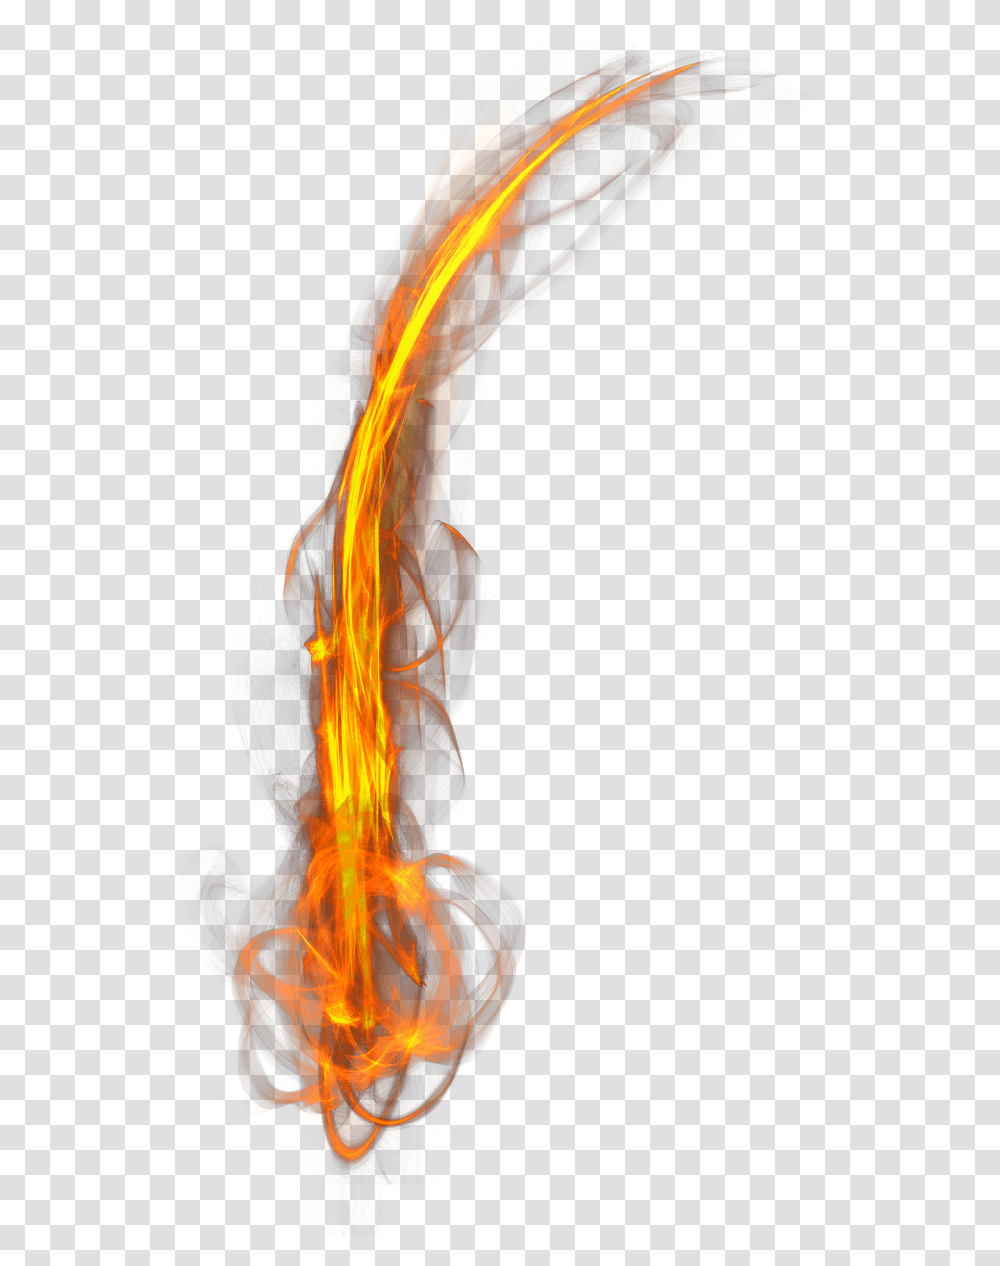 Fire Light Flame Image High Quality Clipart Luz De Fuego, Bonfire Transparent Png